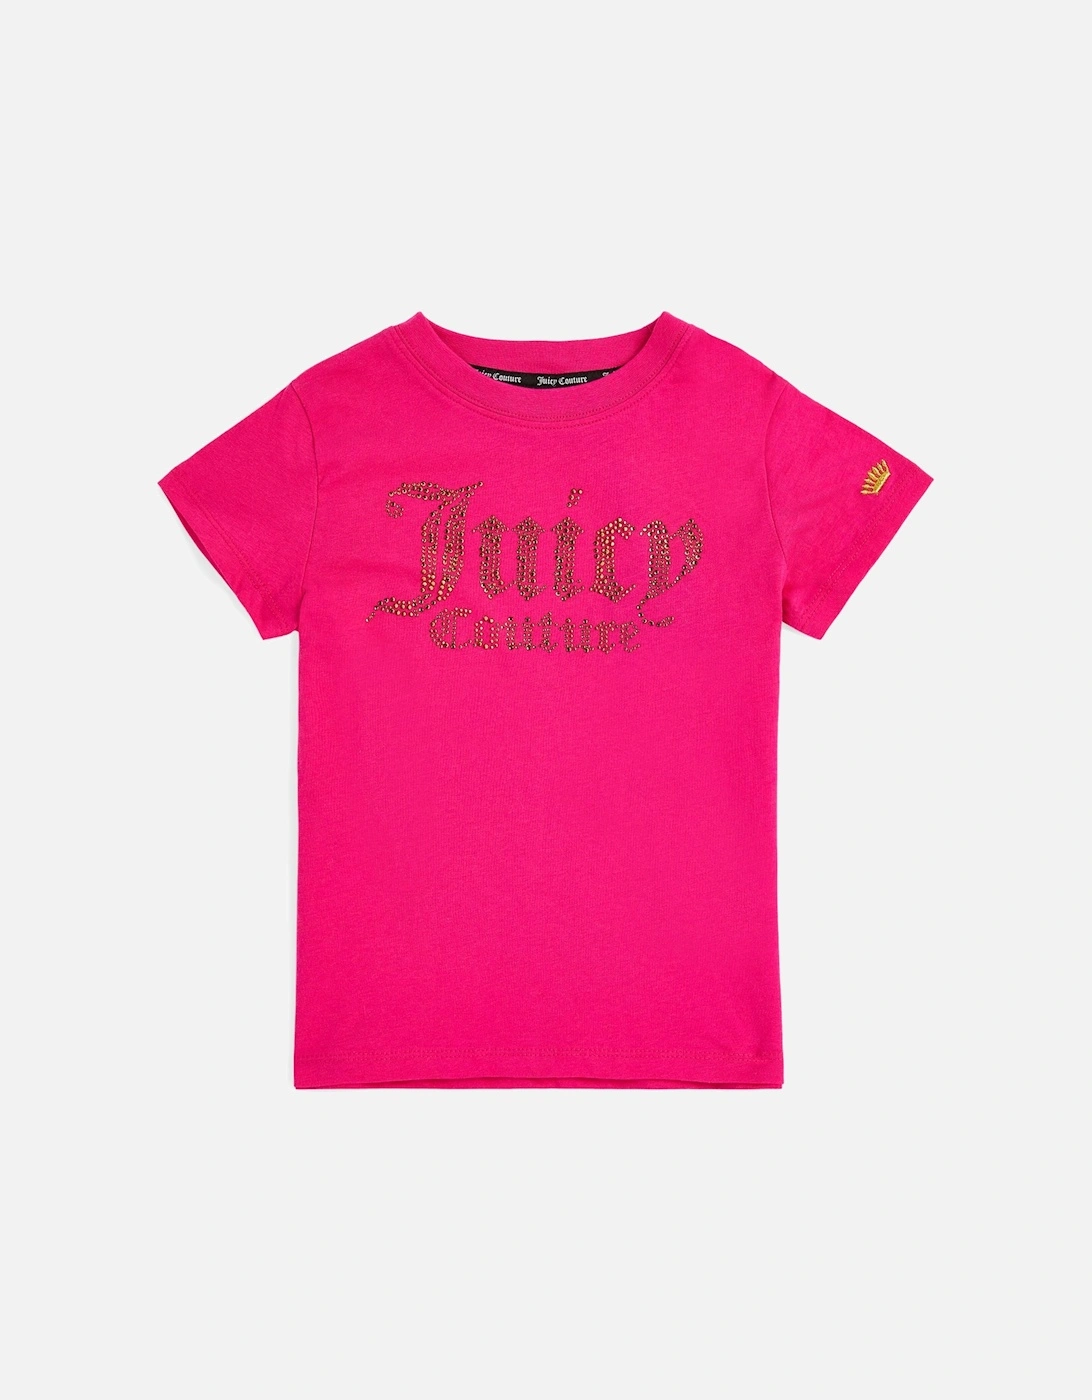 Hot Pink Tshirt, 2 of 1